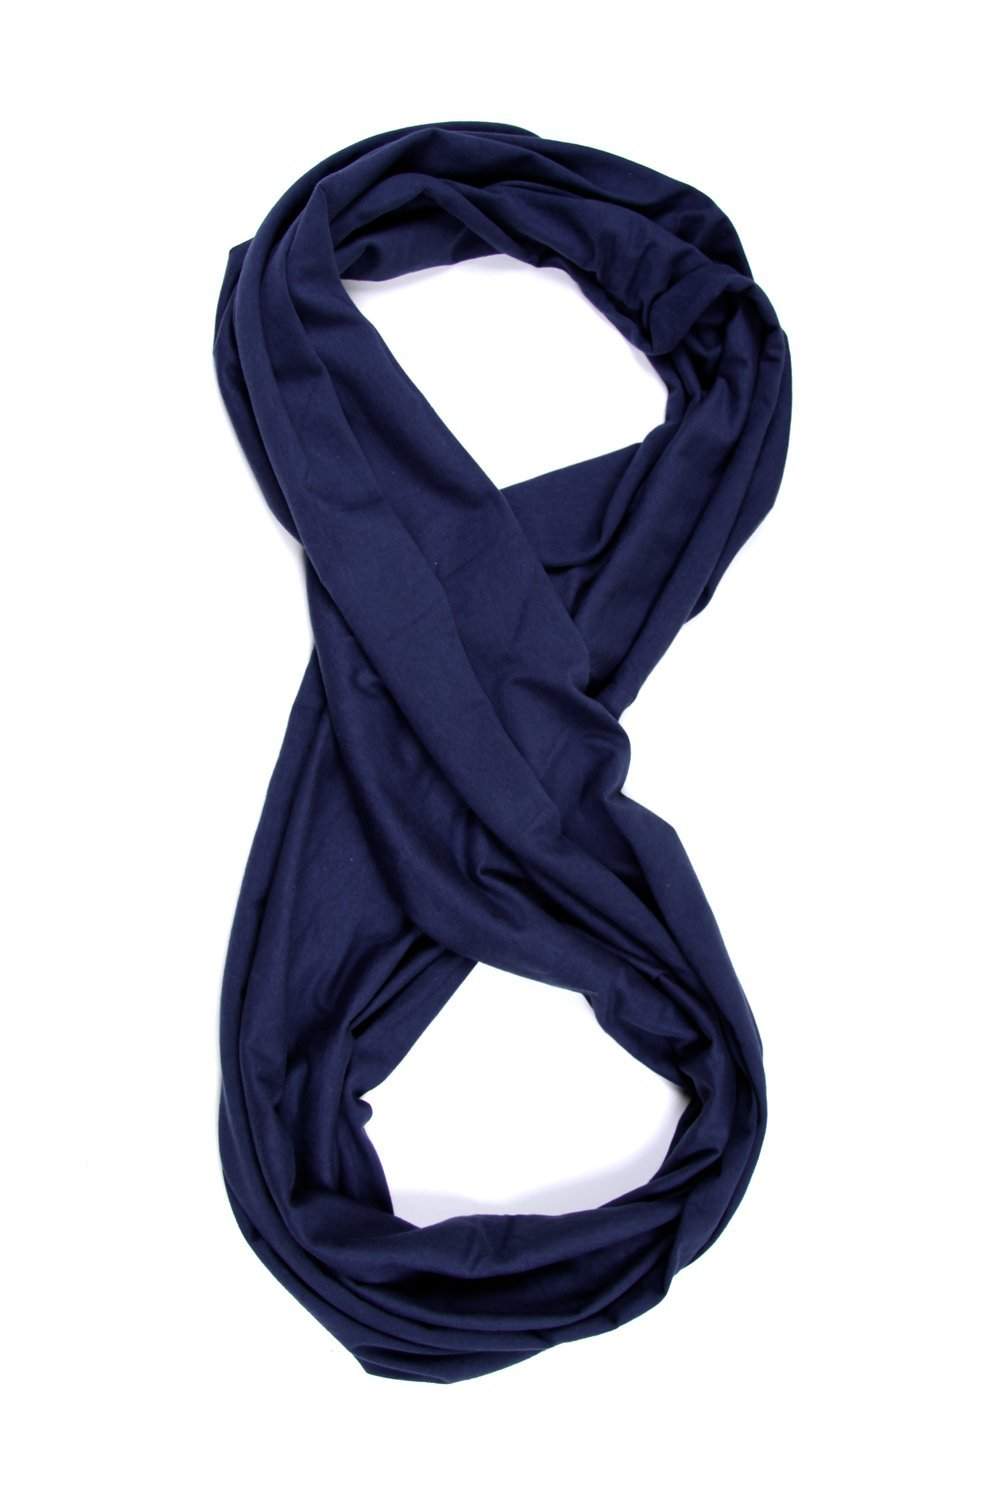 Navy Blue Circle Scarf-scarves-Necklush